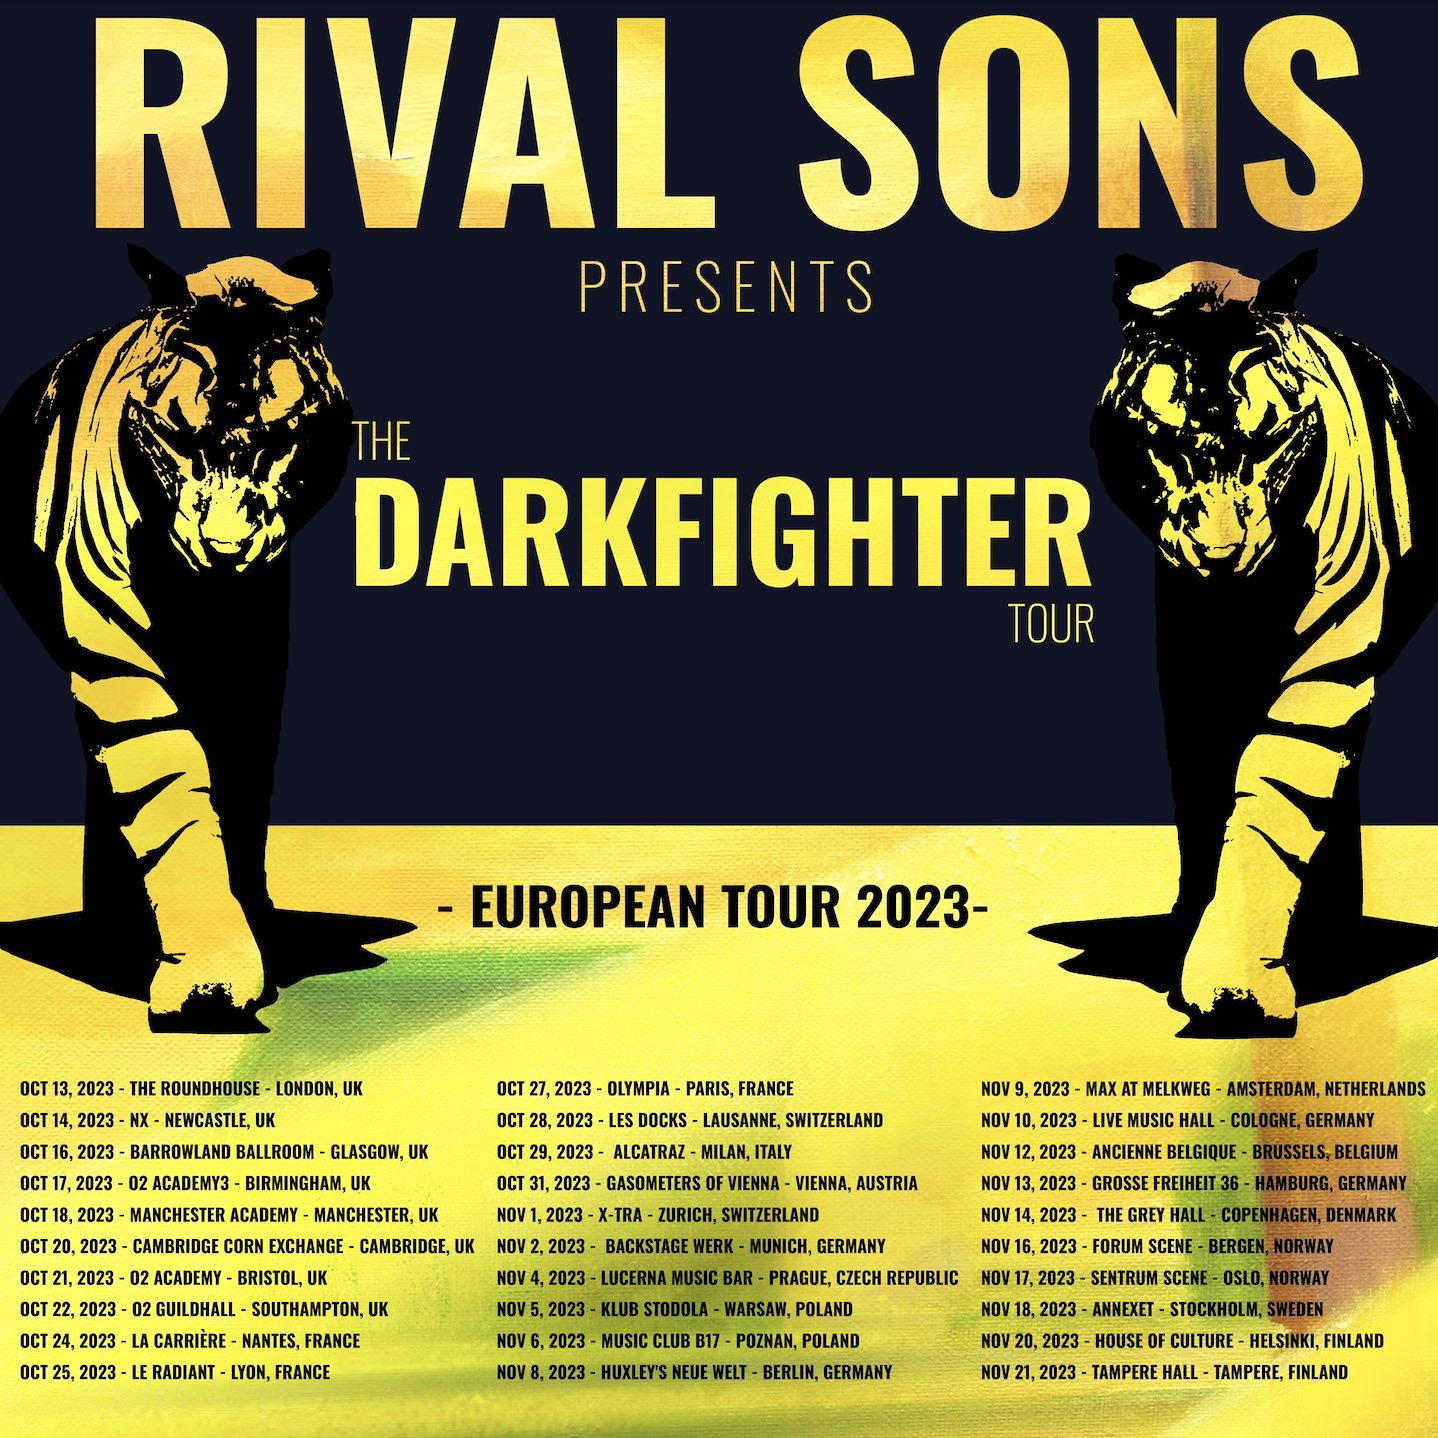 RIVAL SONS: annunciato un concerto a Milano a fine ottobre